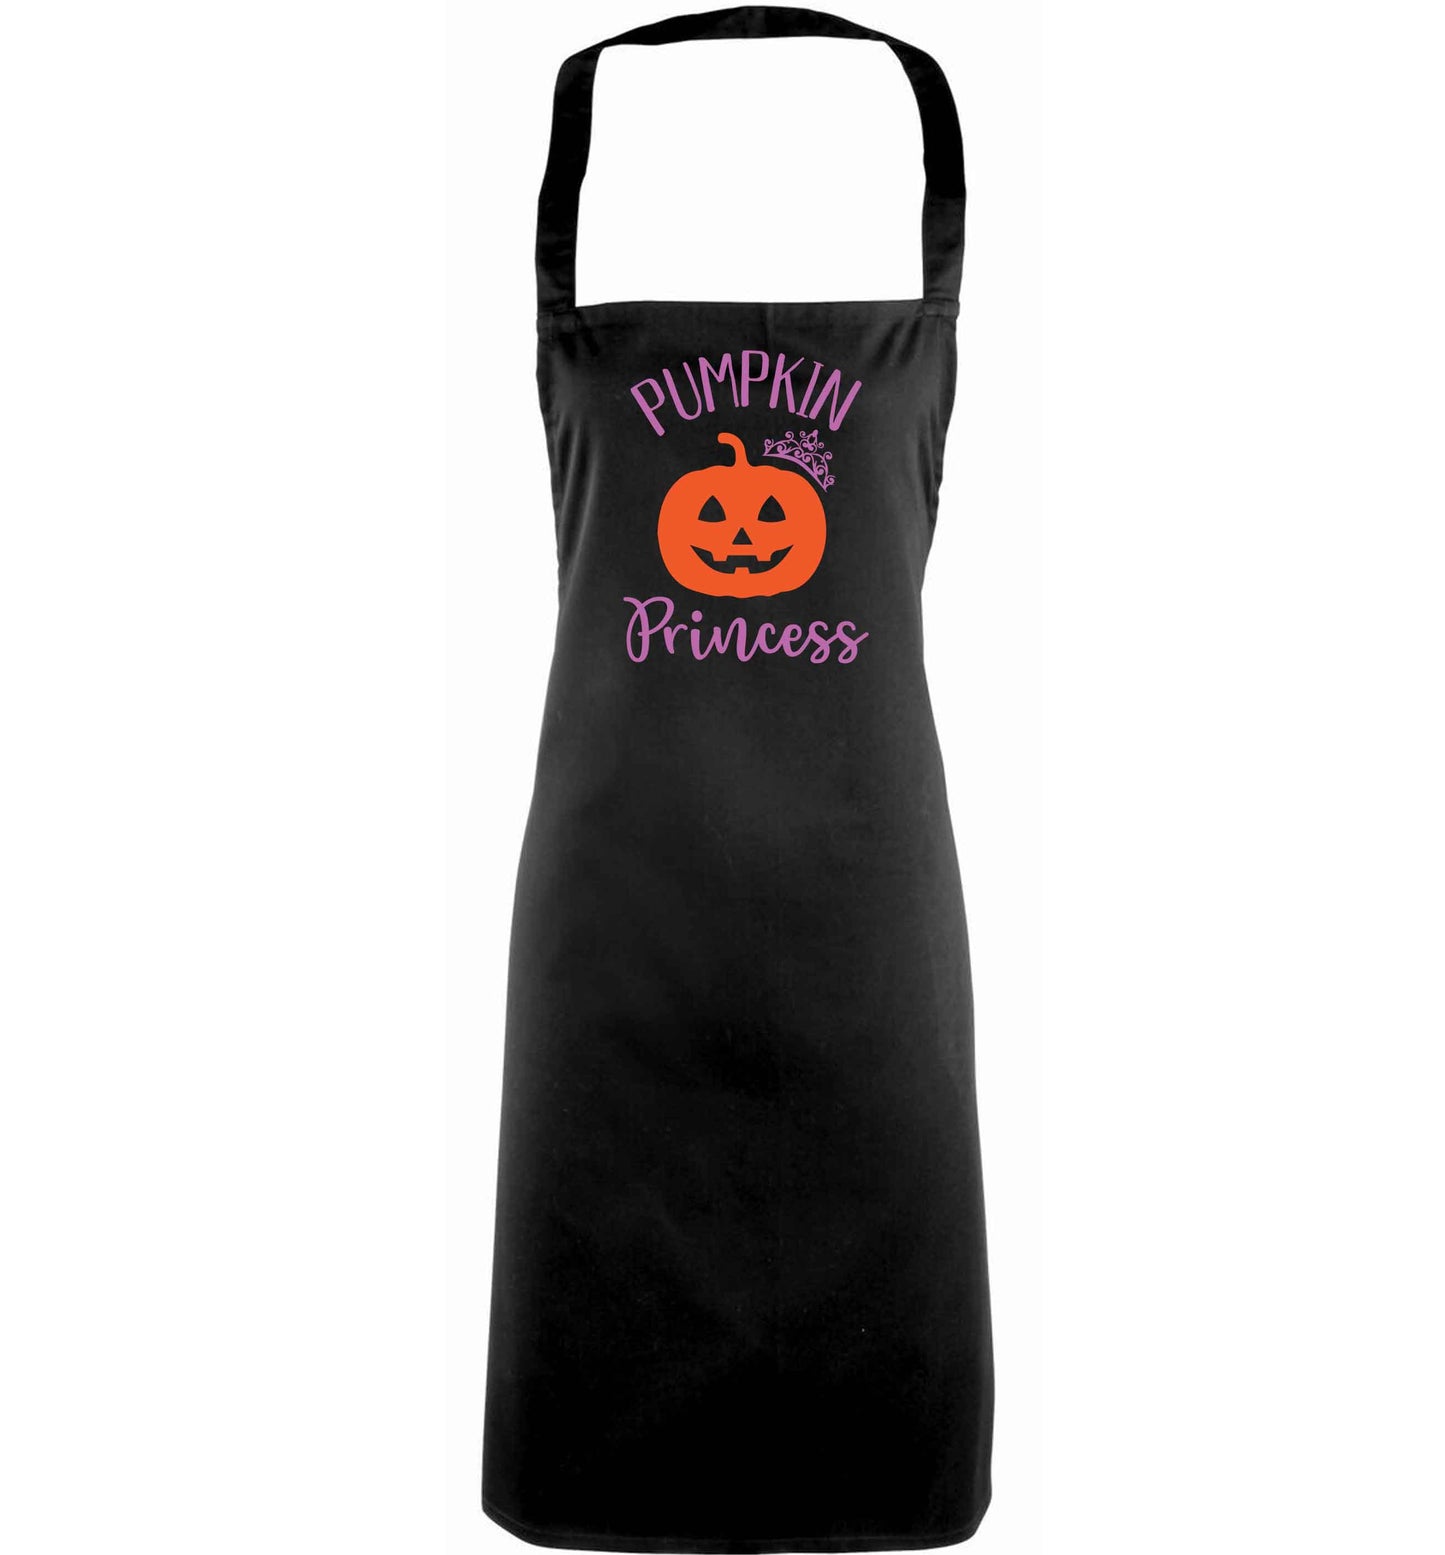 Happiness Pumpkin Spice adults black apron